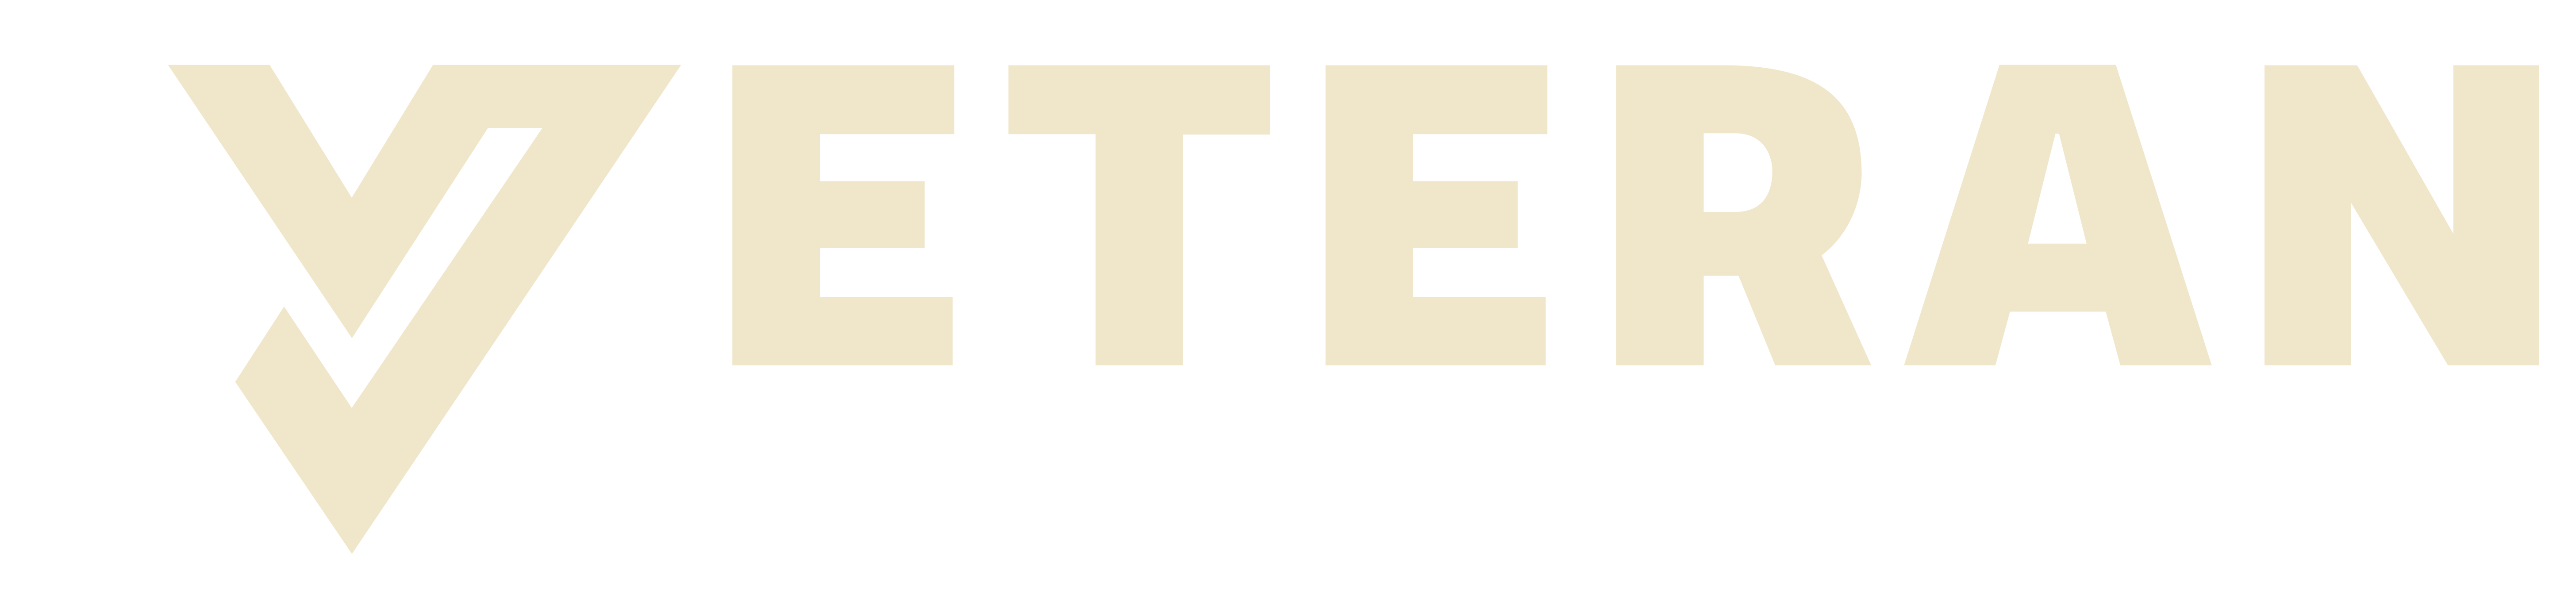 Veteran Database Logo